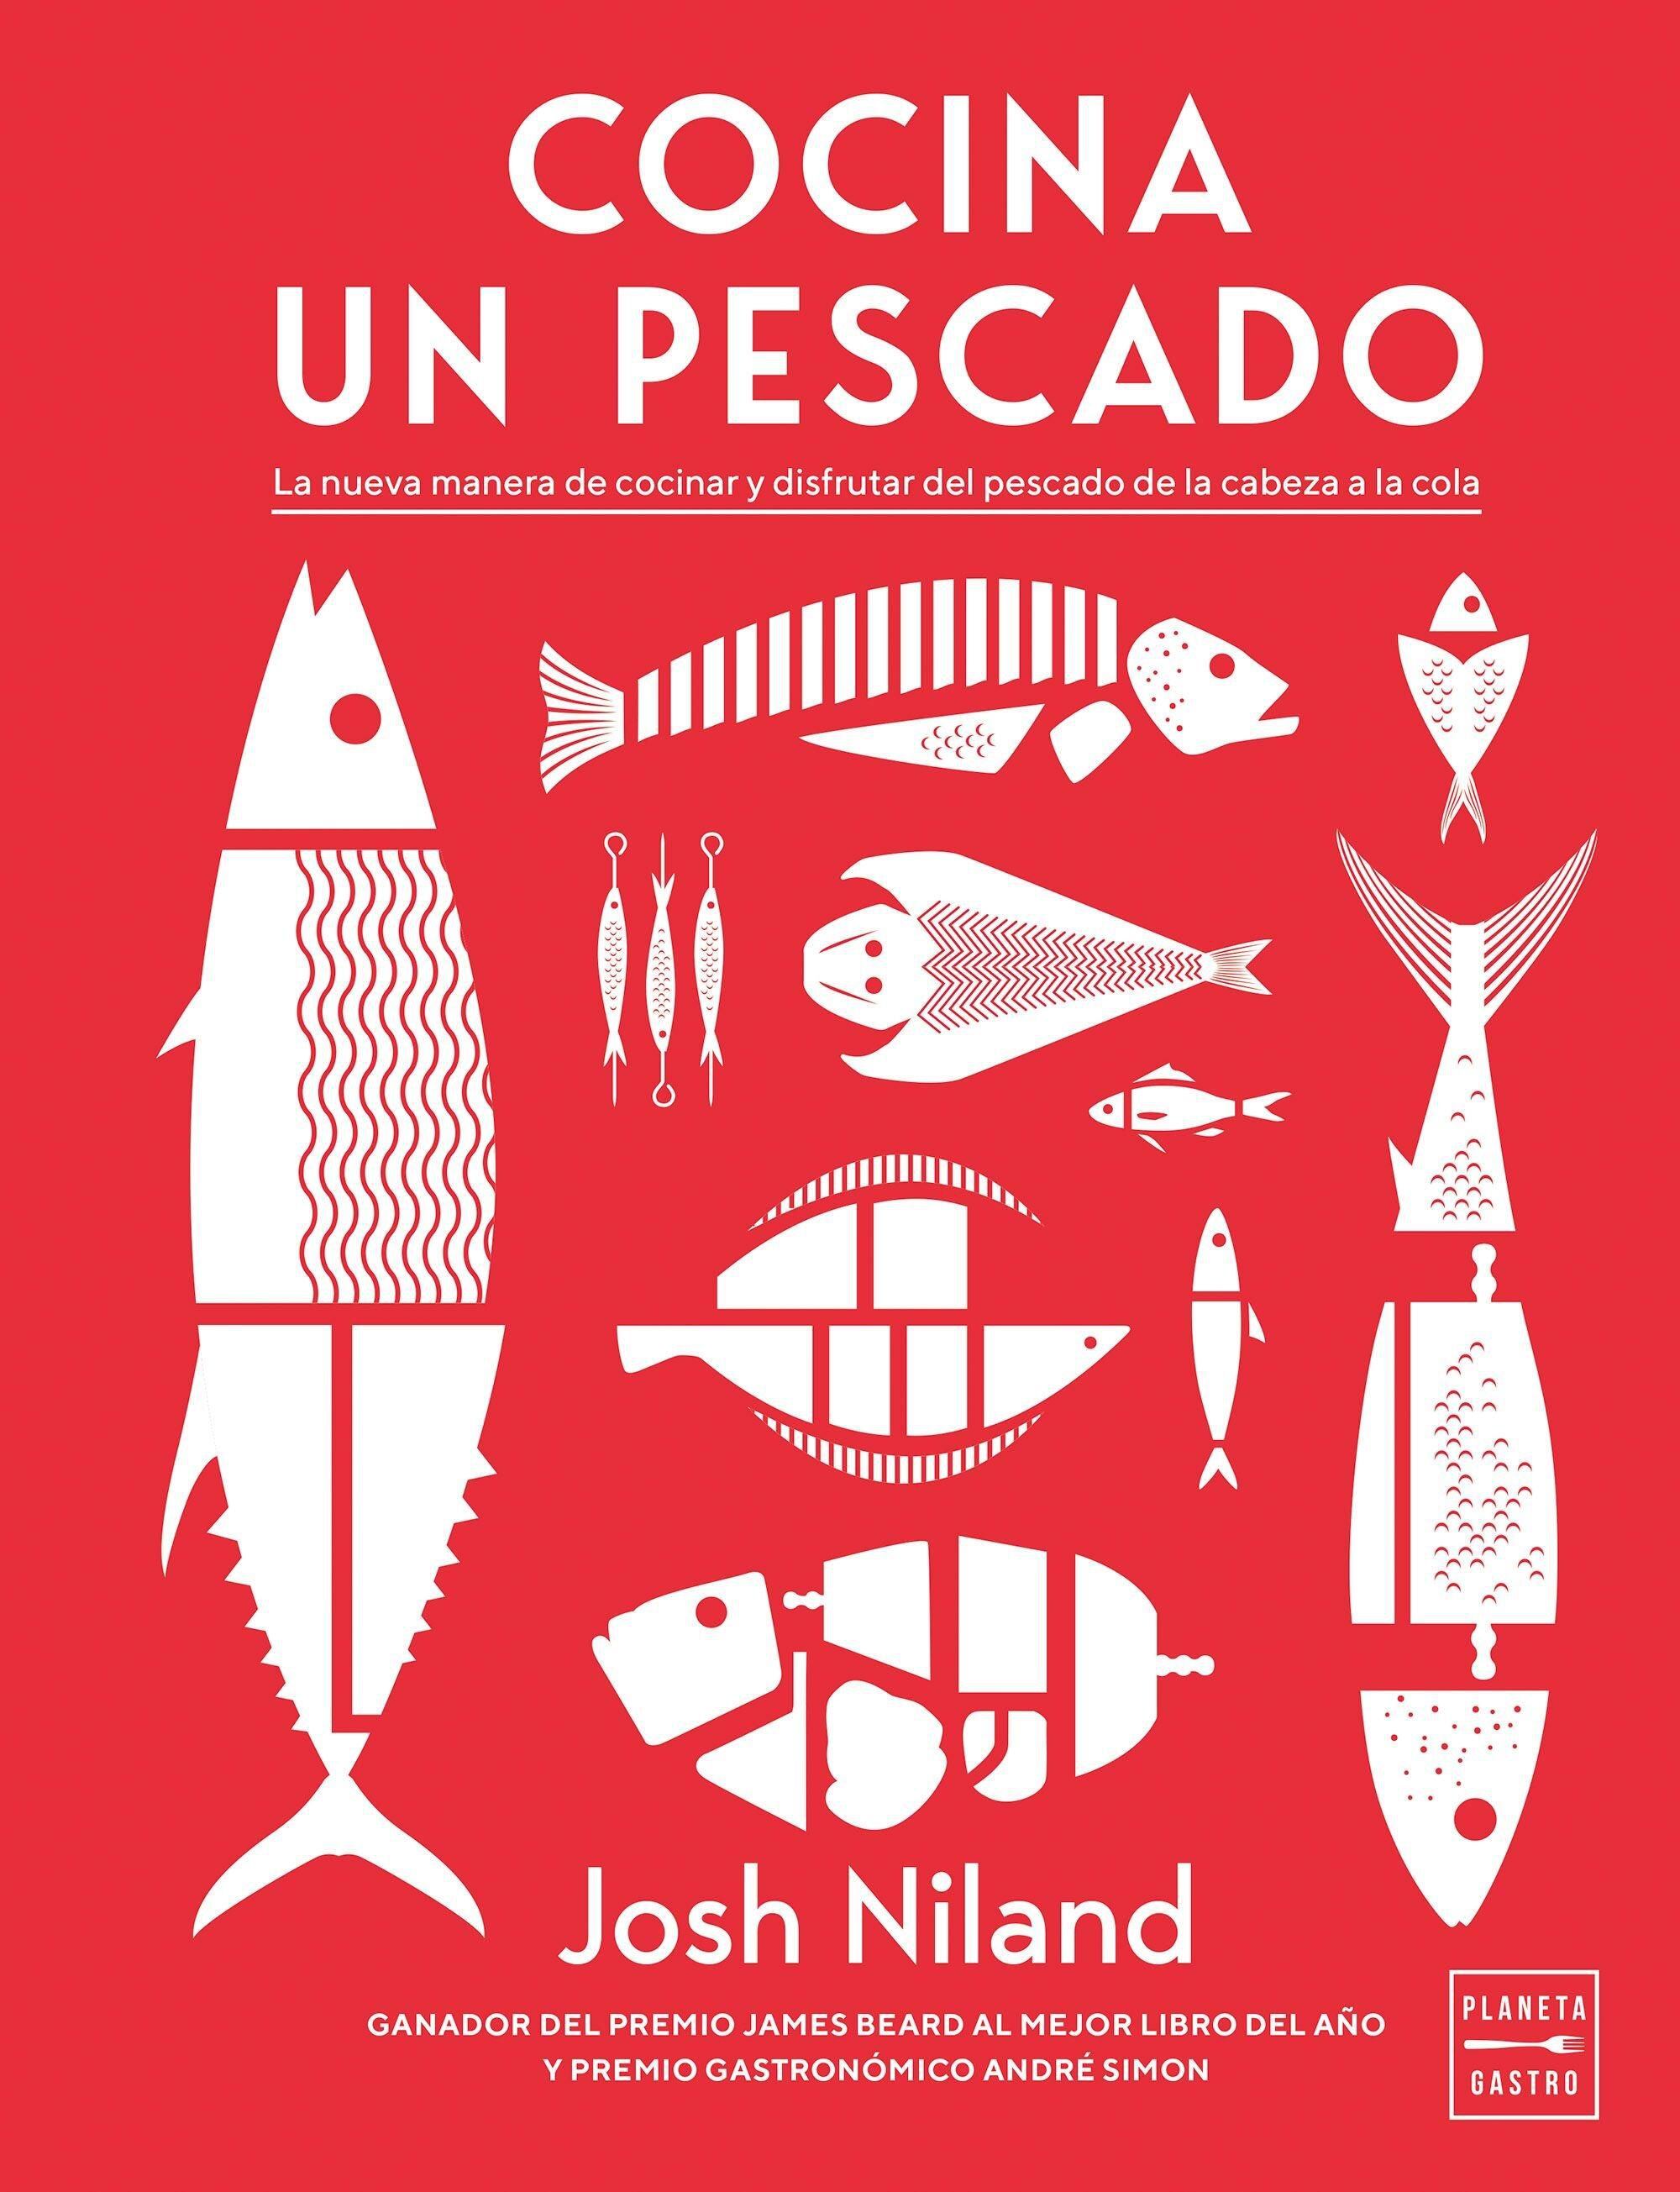 Portada de 'Cocina un pescado', de Josh Niland (Editorial Planeta Gastro).